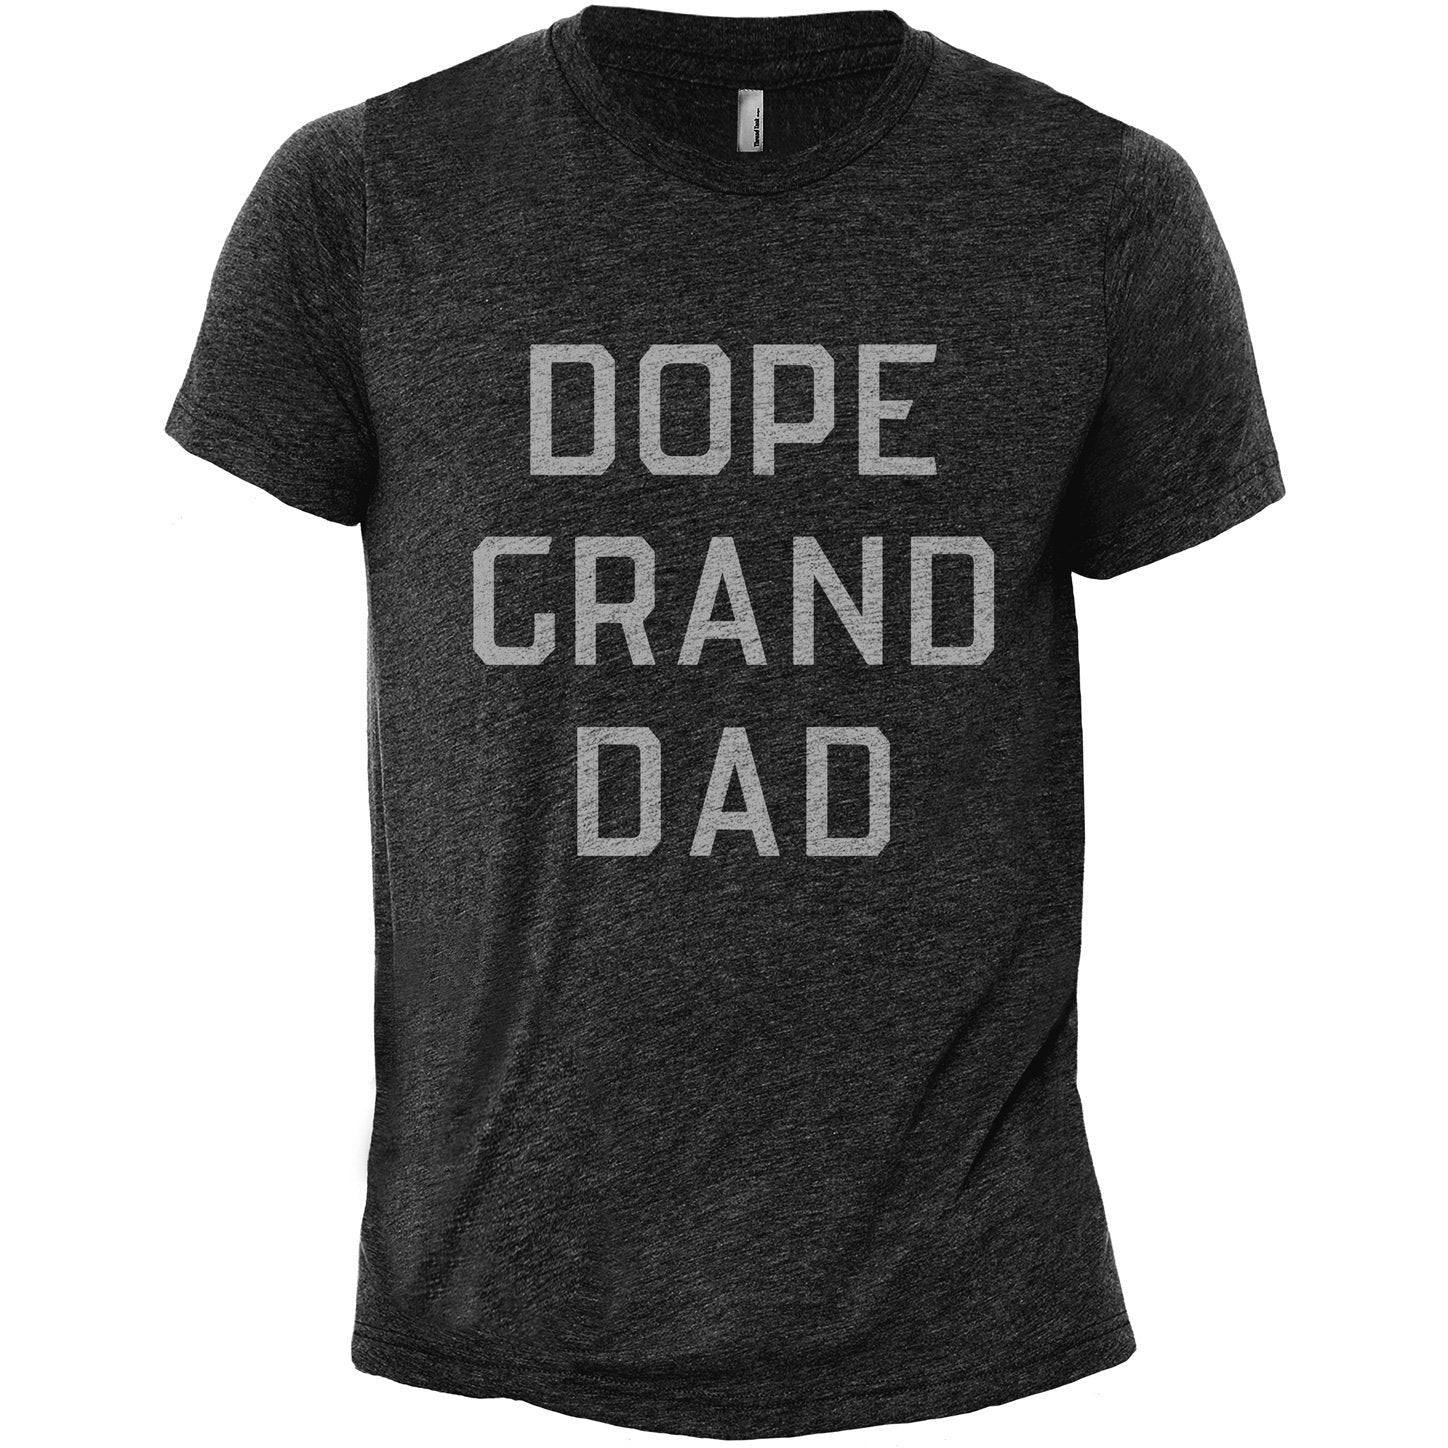 Dope Granddad Charcoal Printed Graphic Men's Crew T-Shirt Tee